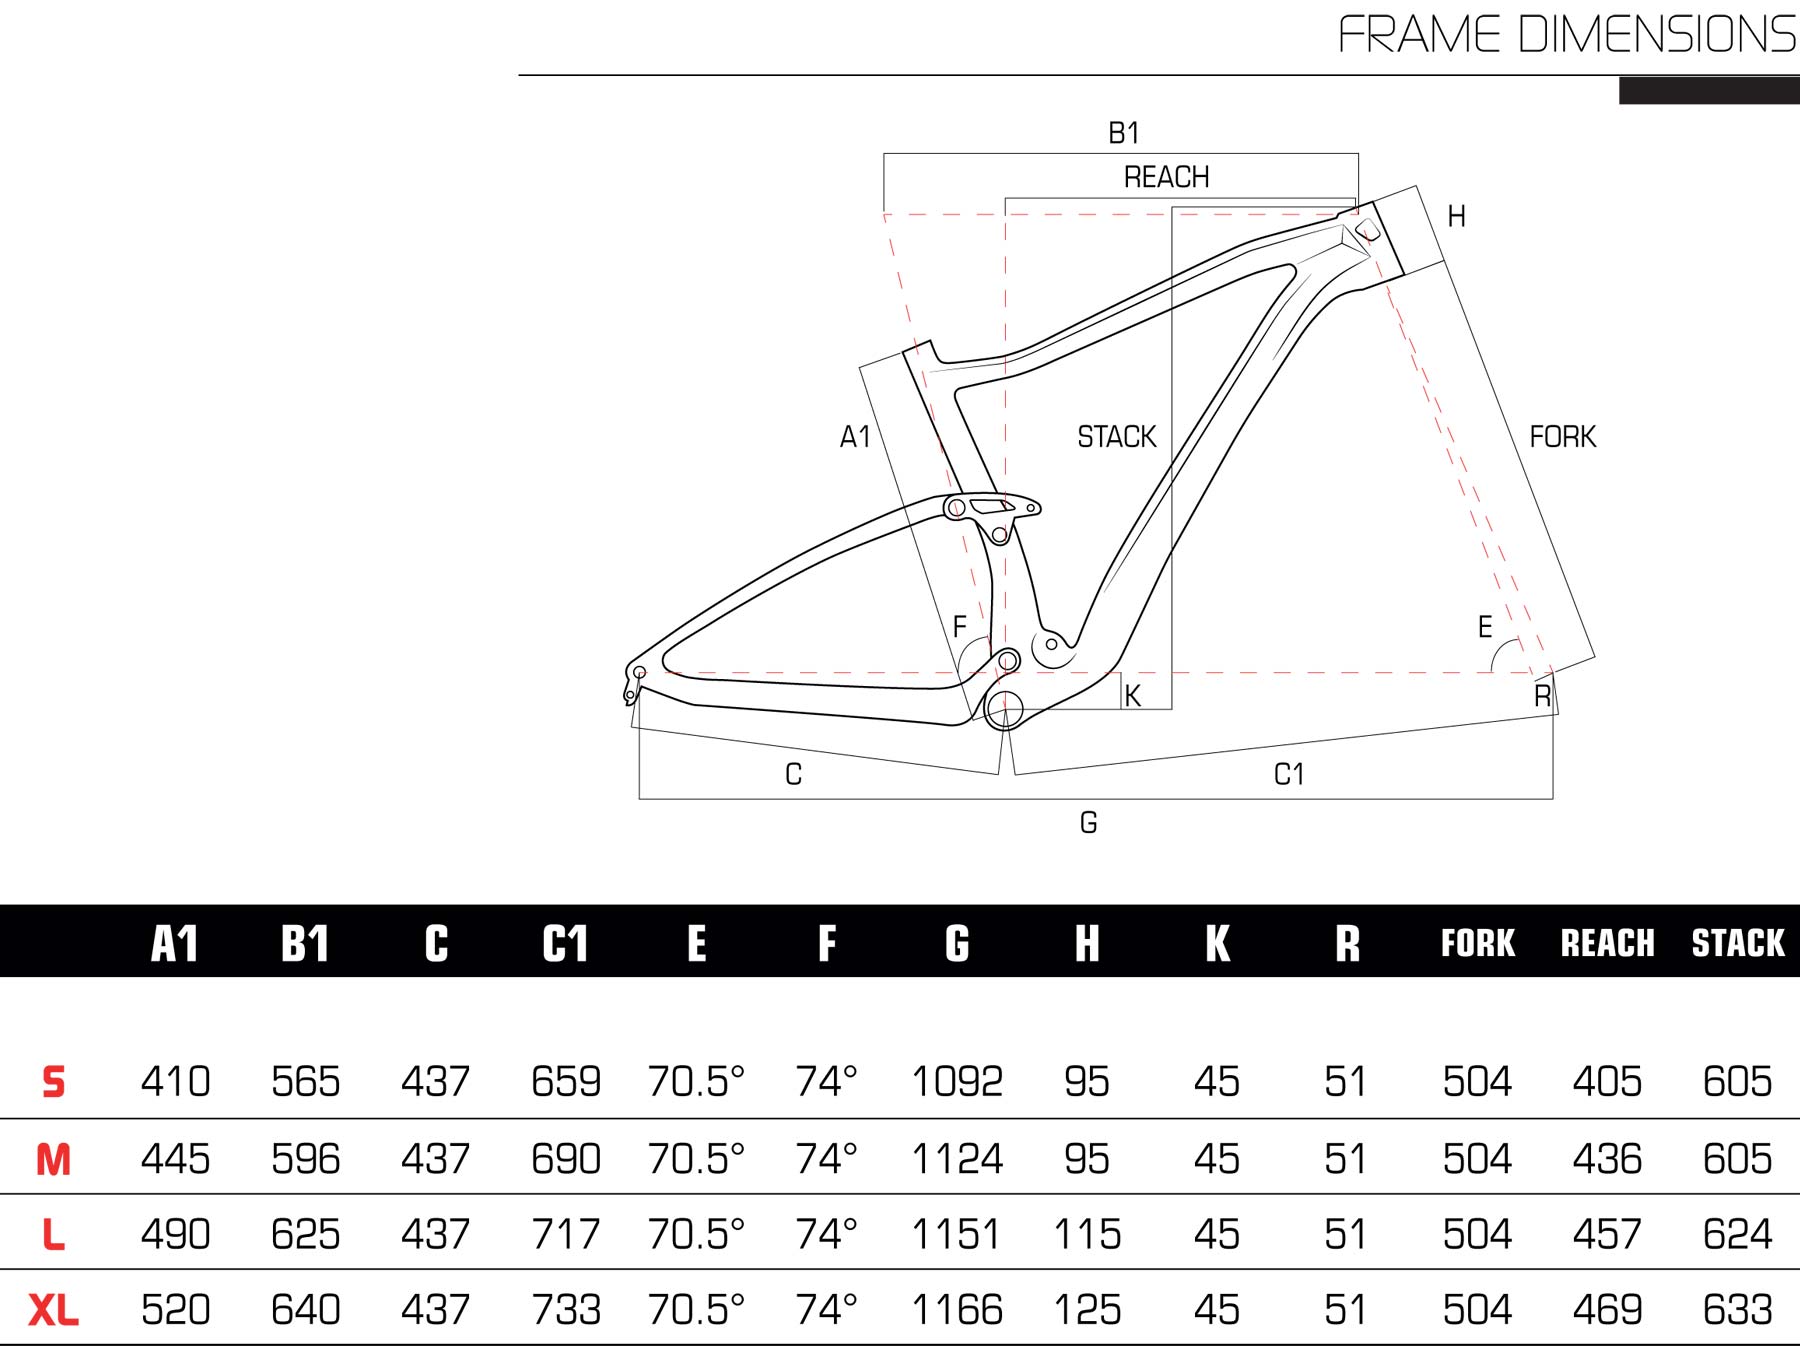 2019 Olympia F1-X carbon 95mm travel carbon XC race bike geometry